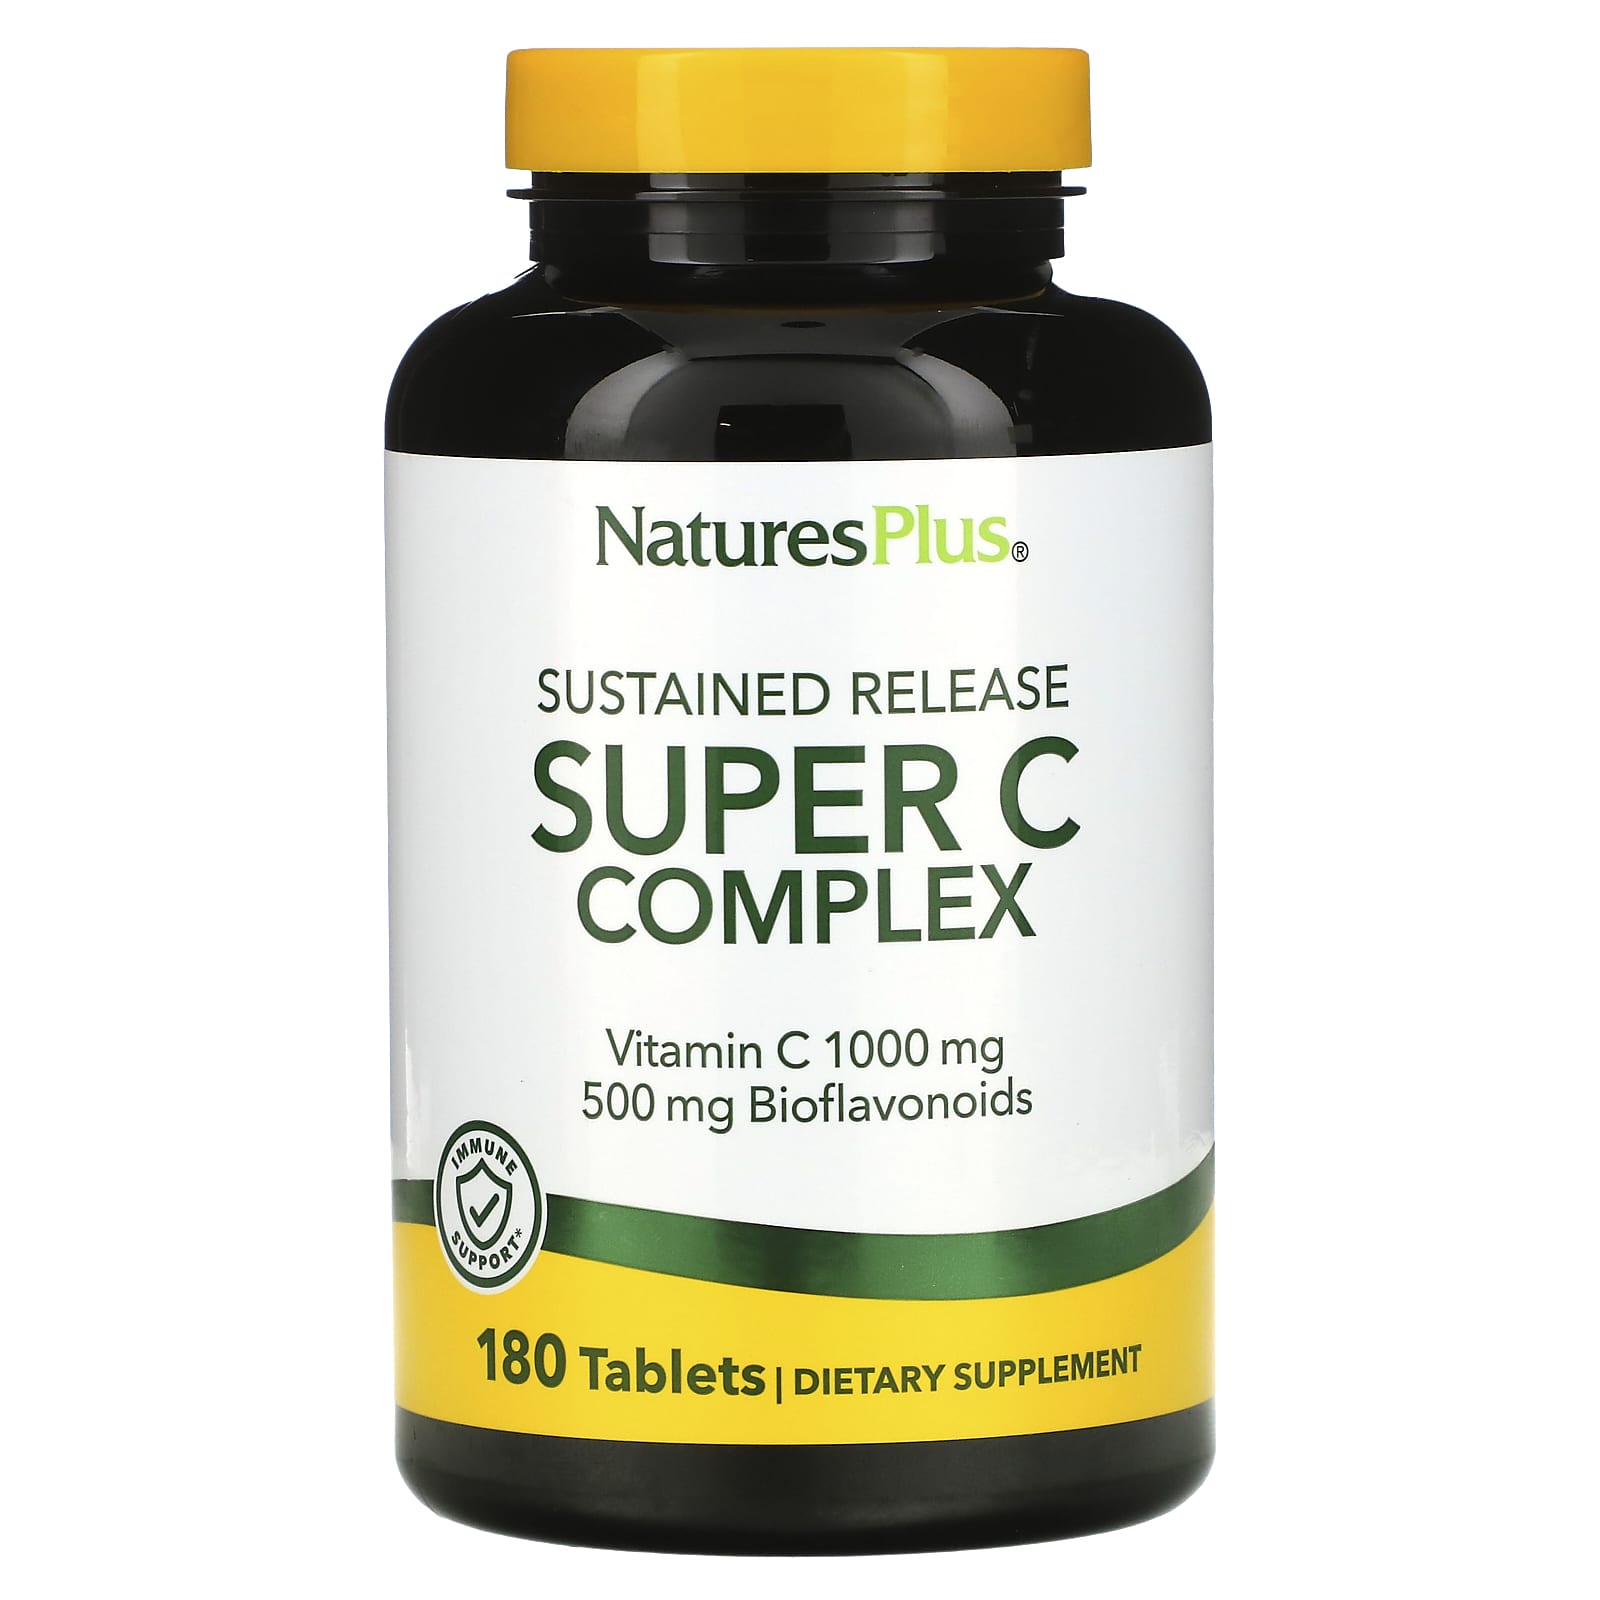 NaturesPlus, Sustained Release Super C Complex, 180 Tablets